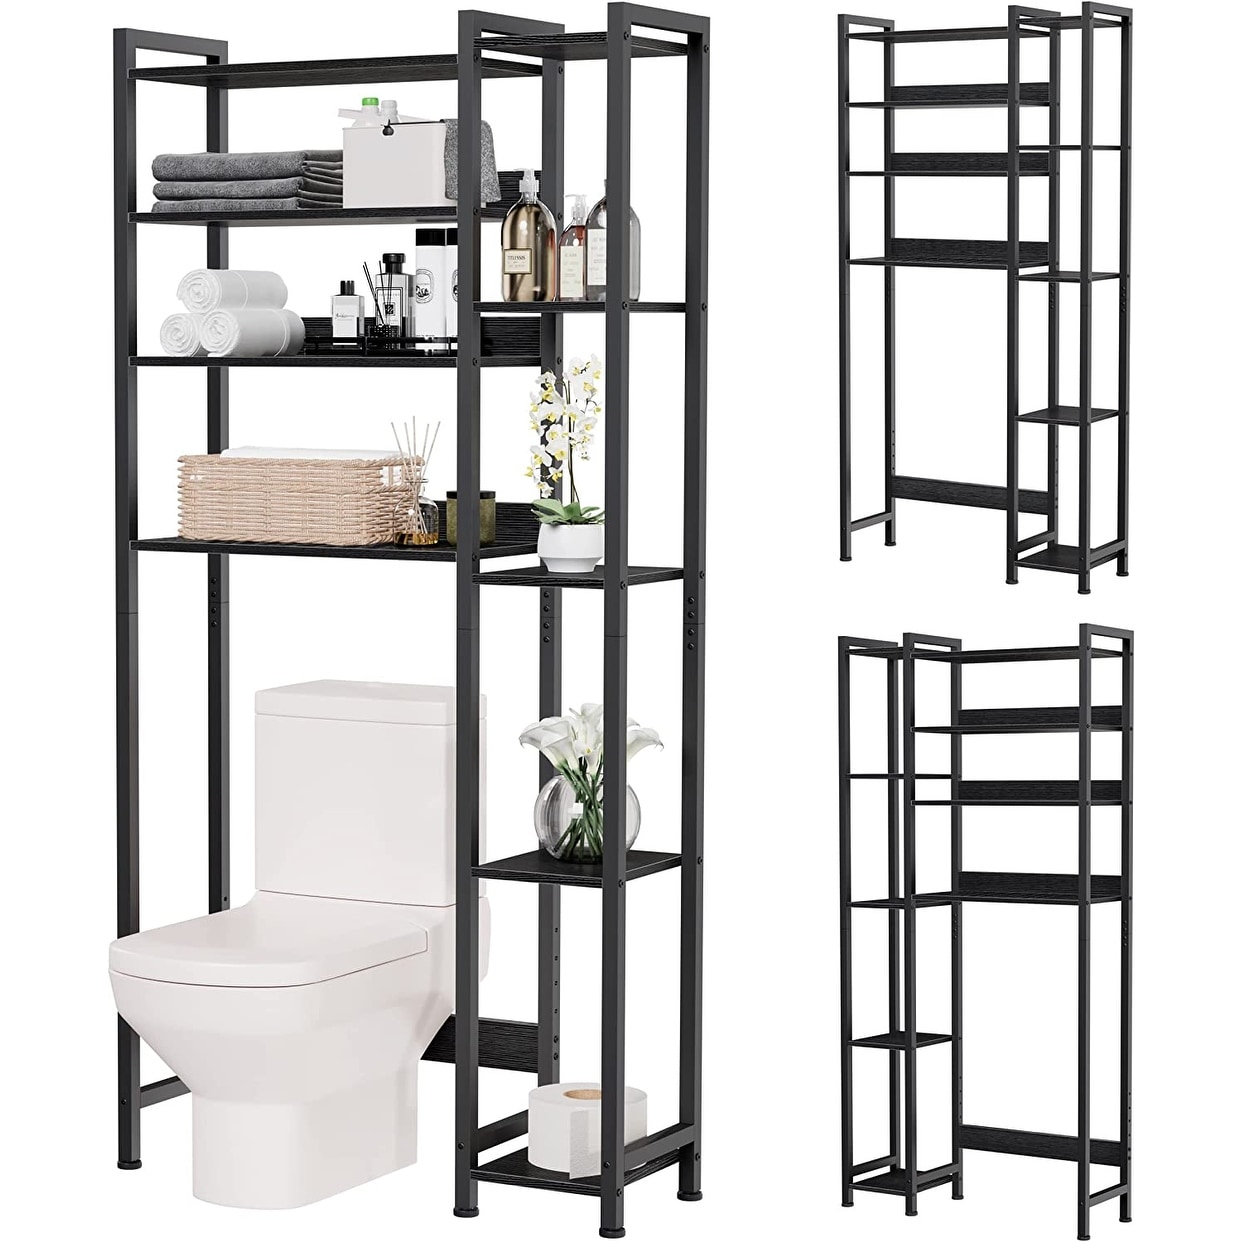 https://ak1.ostkcdn.com/images/products/is/images/direct/0a3095b0acf895f80b9656df27f10ed97467dd9b/Over-The-Toilet-Storage-Black%2C-4-Tier-Bathroom-Cabinet-with-Side-Shelves%2C-Freestanding-Rack-Restroom-Space-Saver.jpg